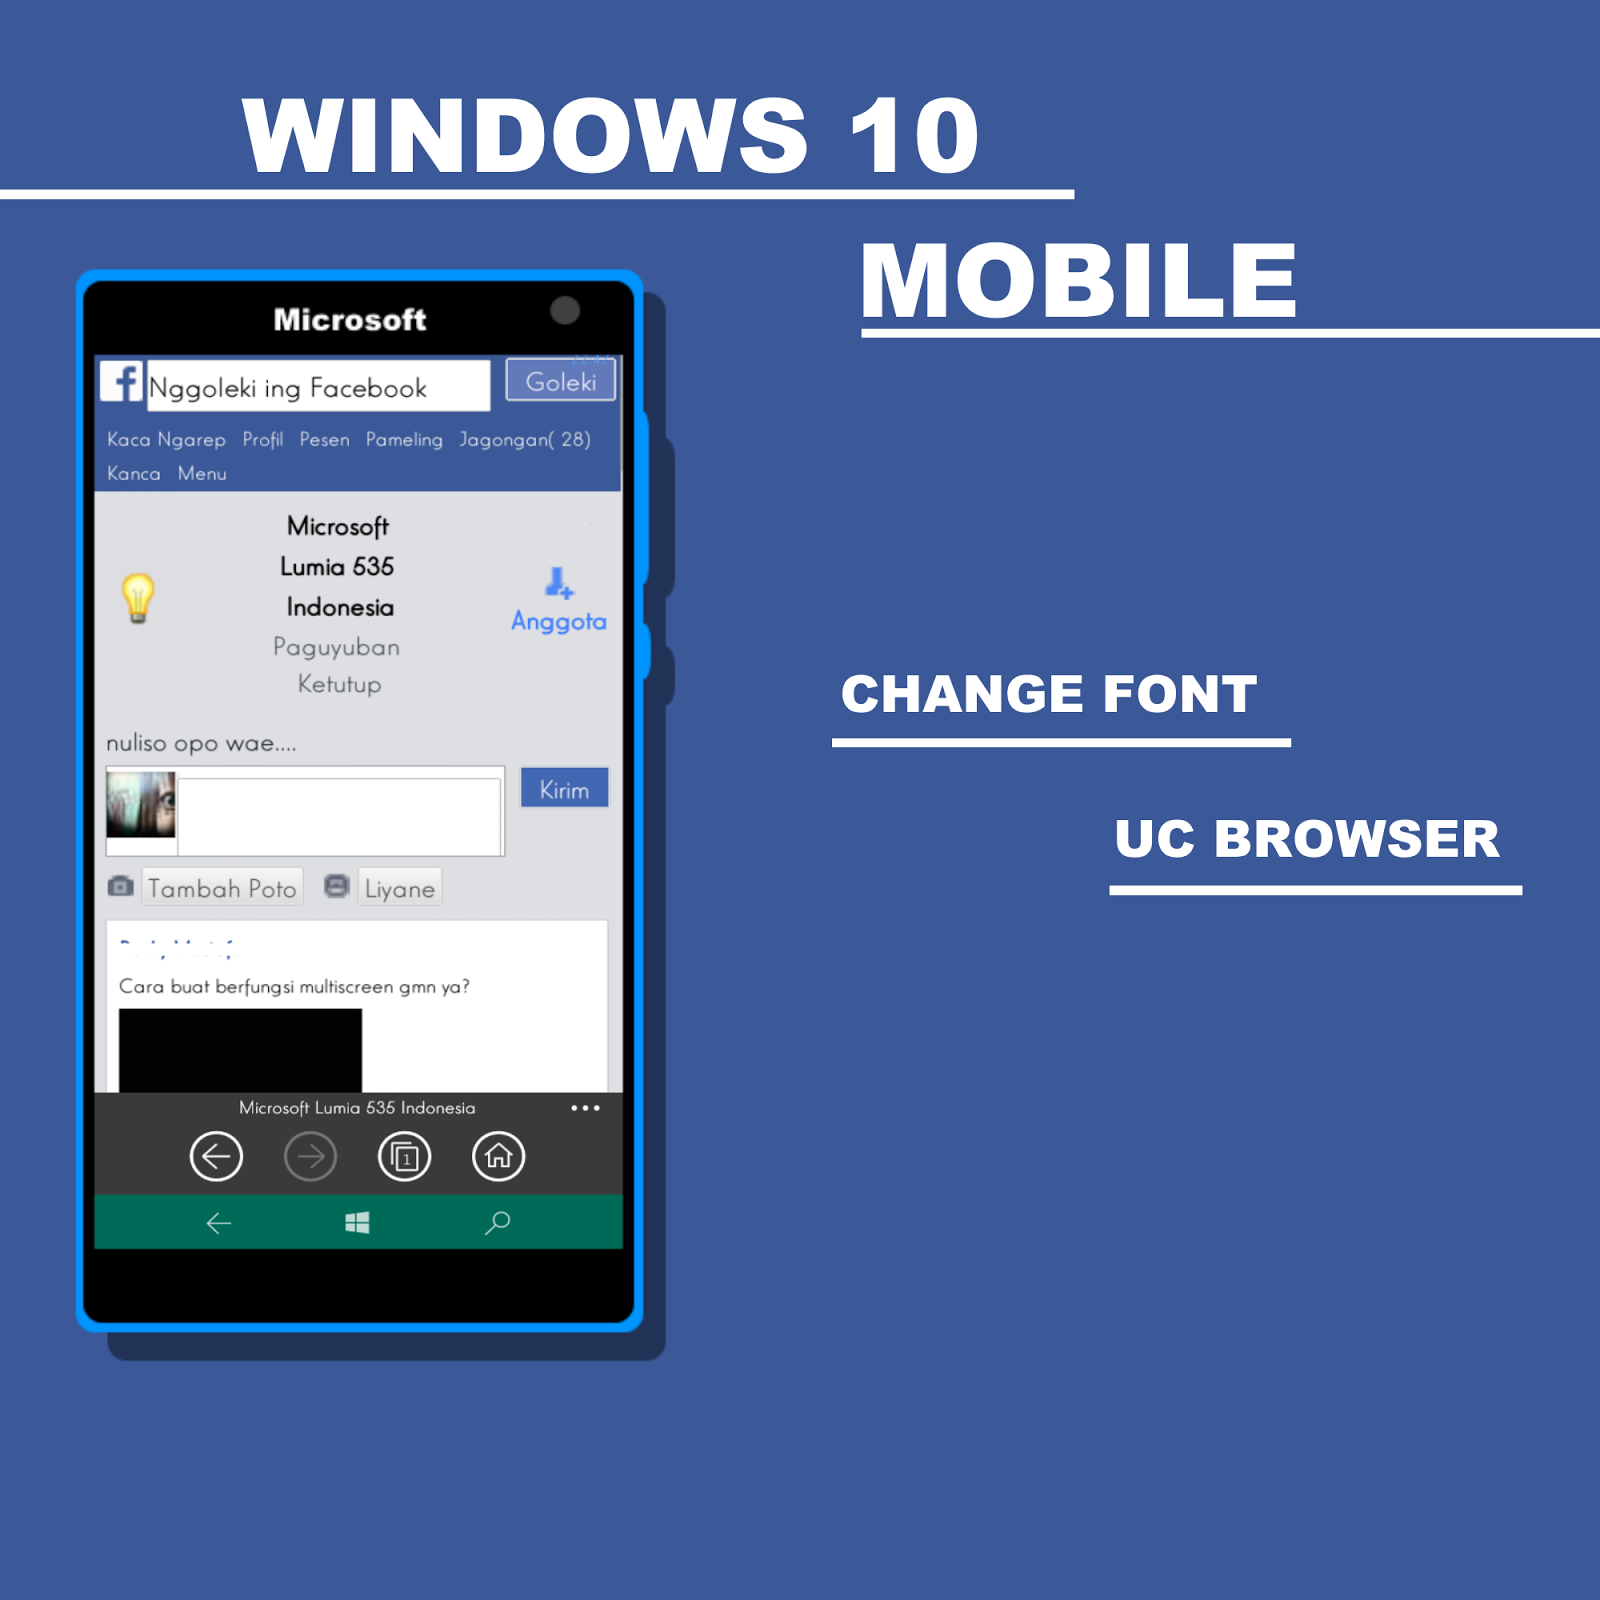 Rubah Font UC Browser Windows 10 Mobile - Blog Download